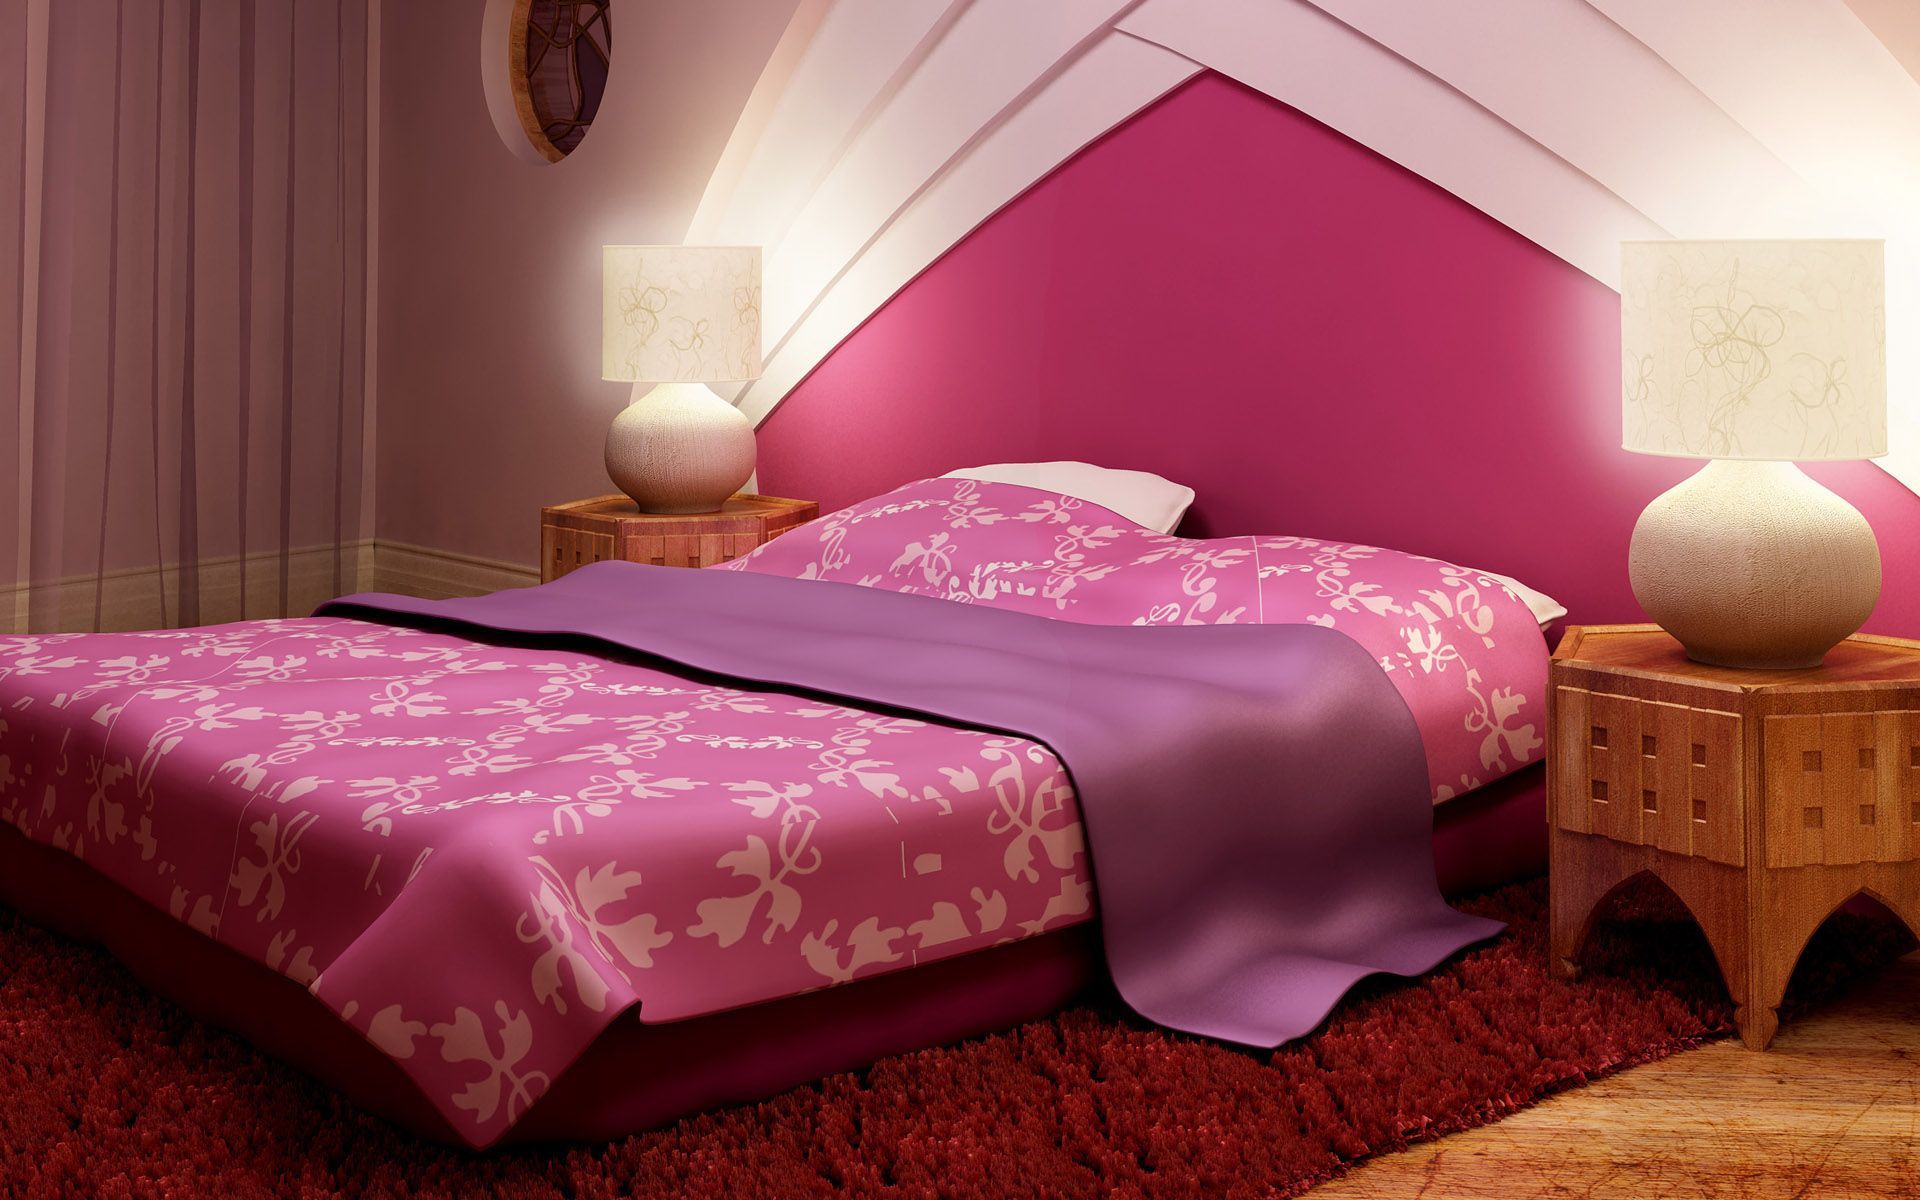 Wallpaper Color For Bedroom - carrotapp